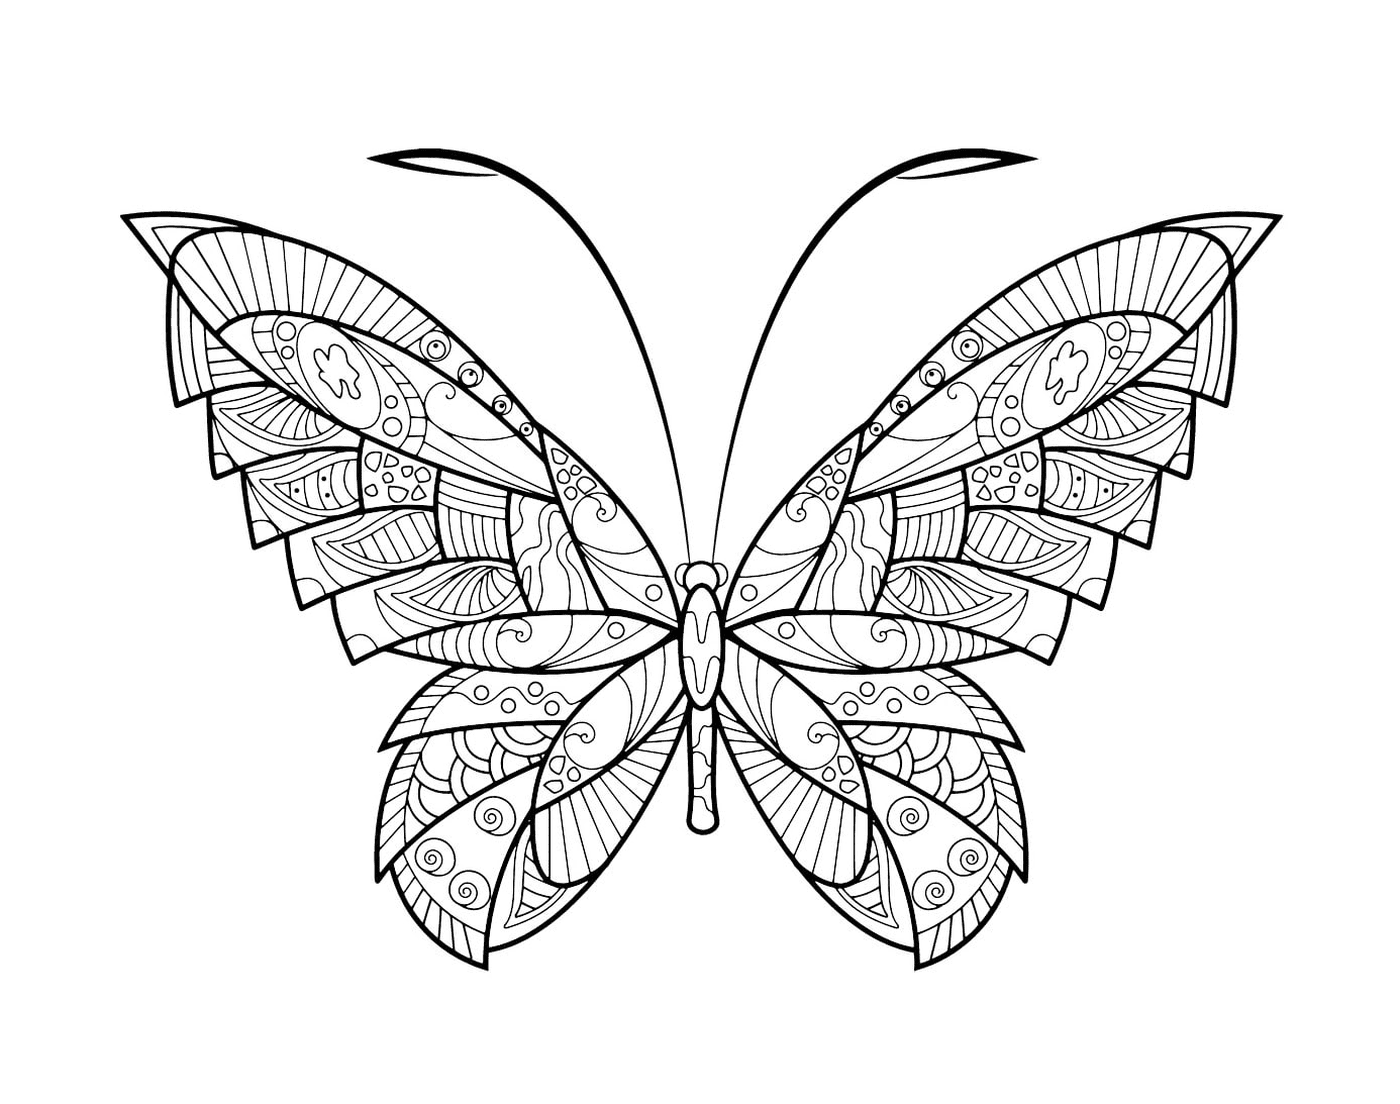  Zentangle Schmetterling mit komplexen Mustern 